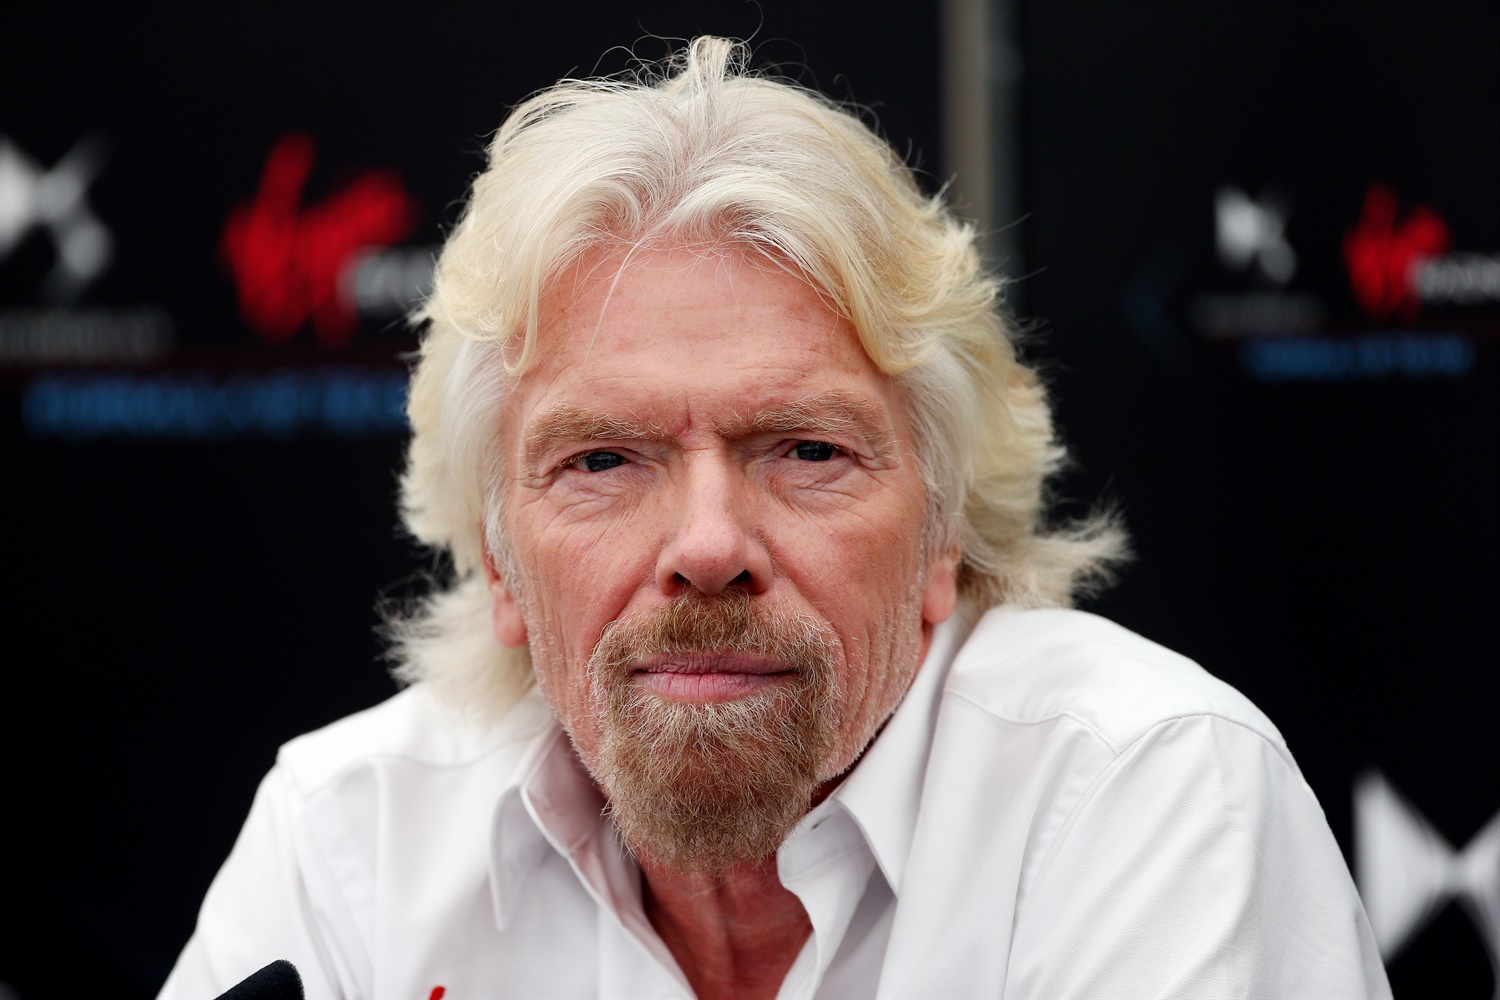 Backlash at rail boss Richard Branson as he says lateness ‘annoys’ him 